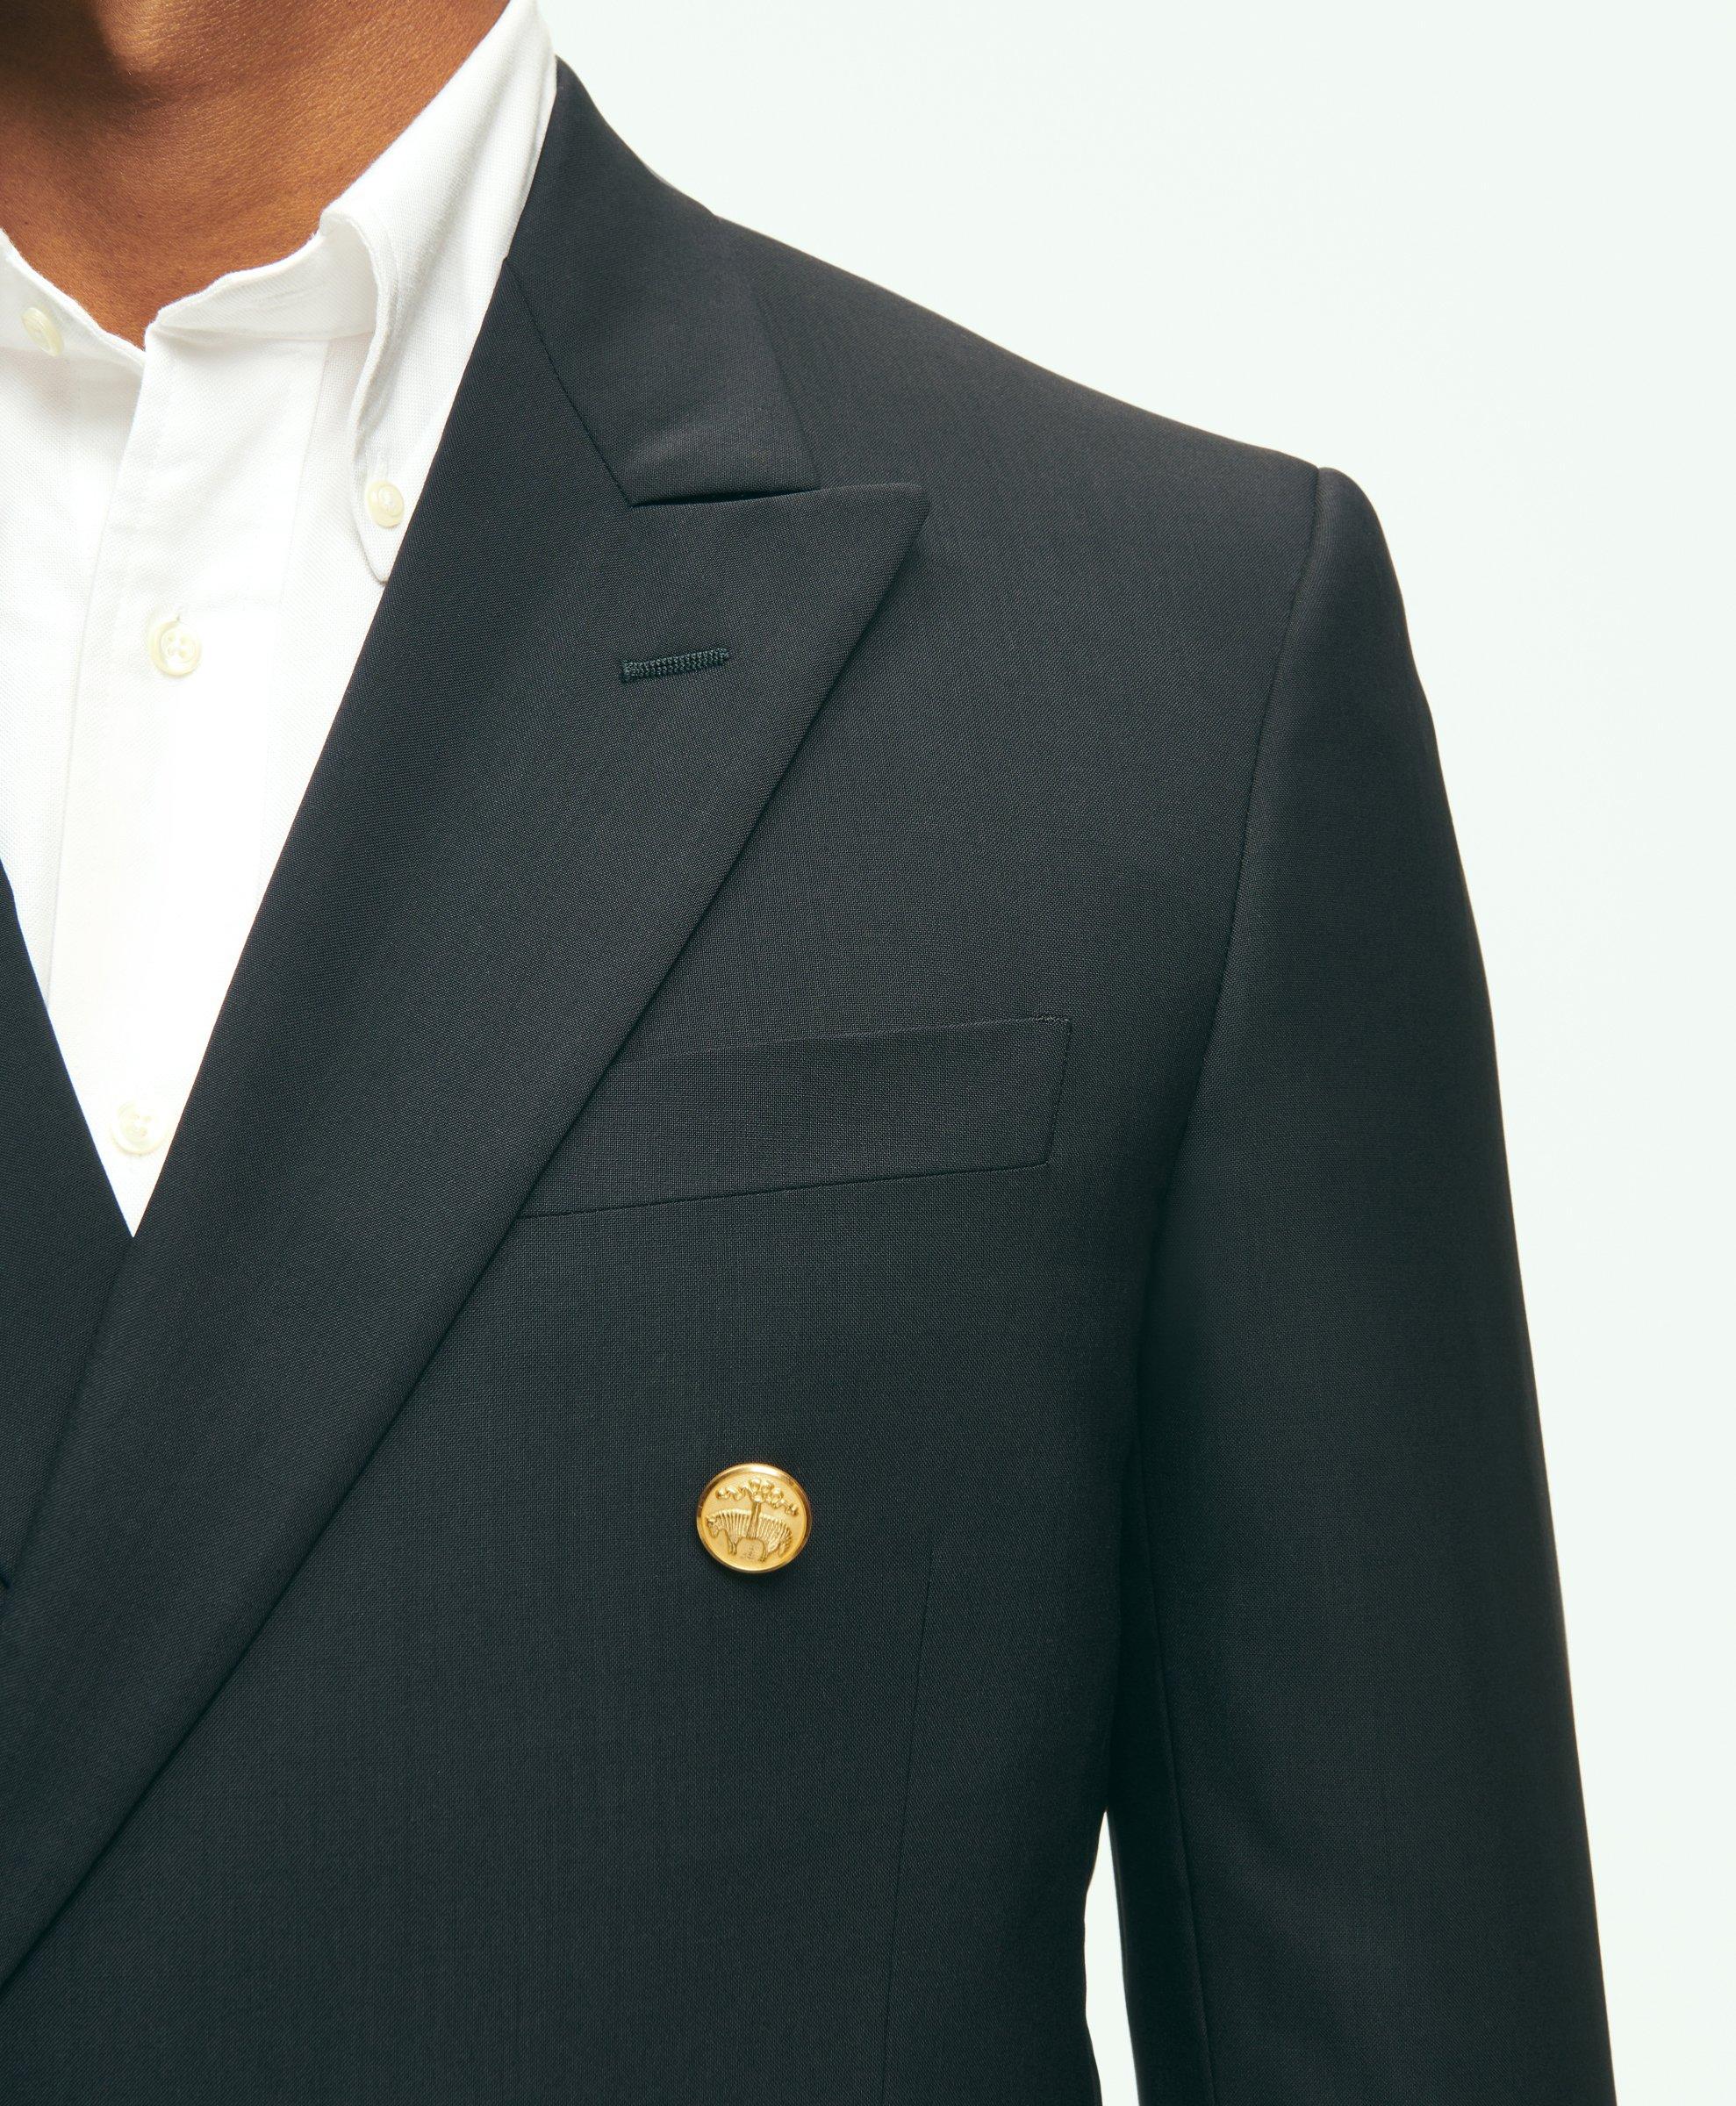 Men's Navy Wool Double-Breasted Blazer